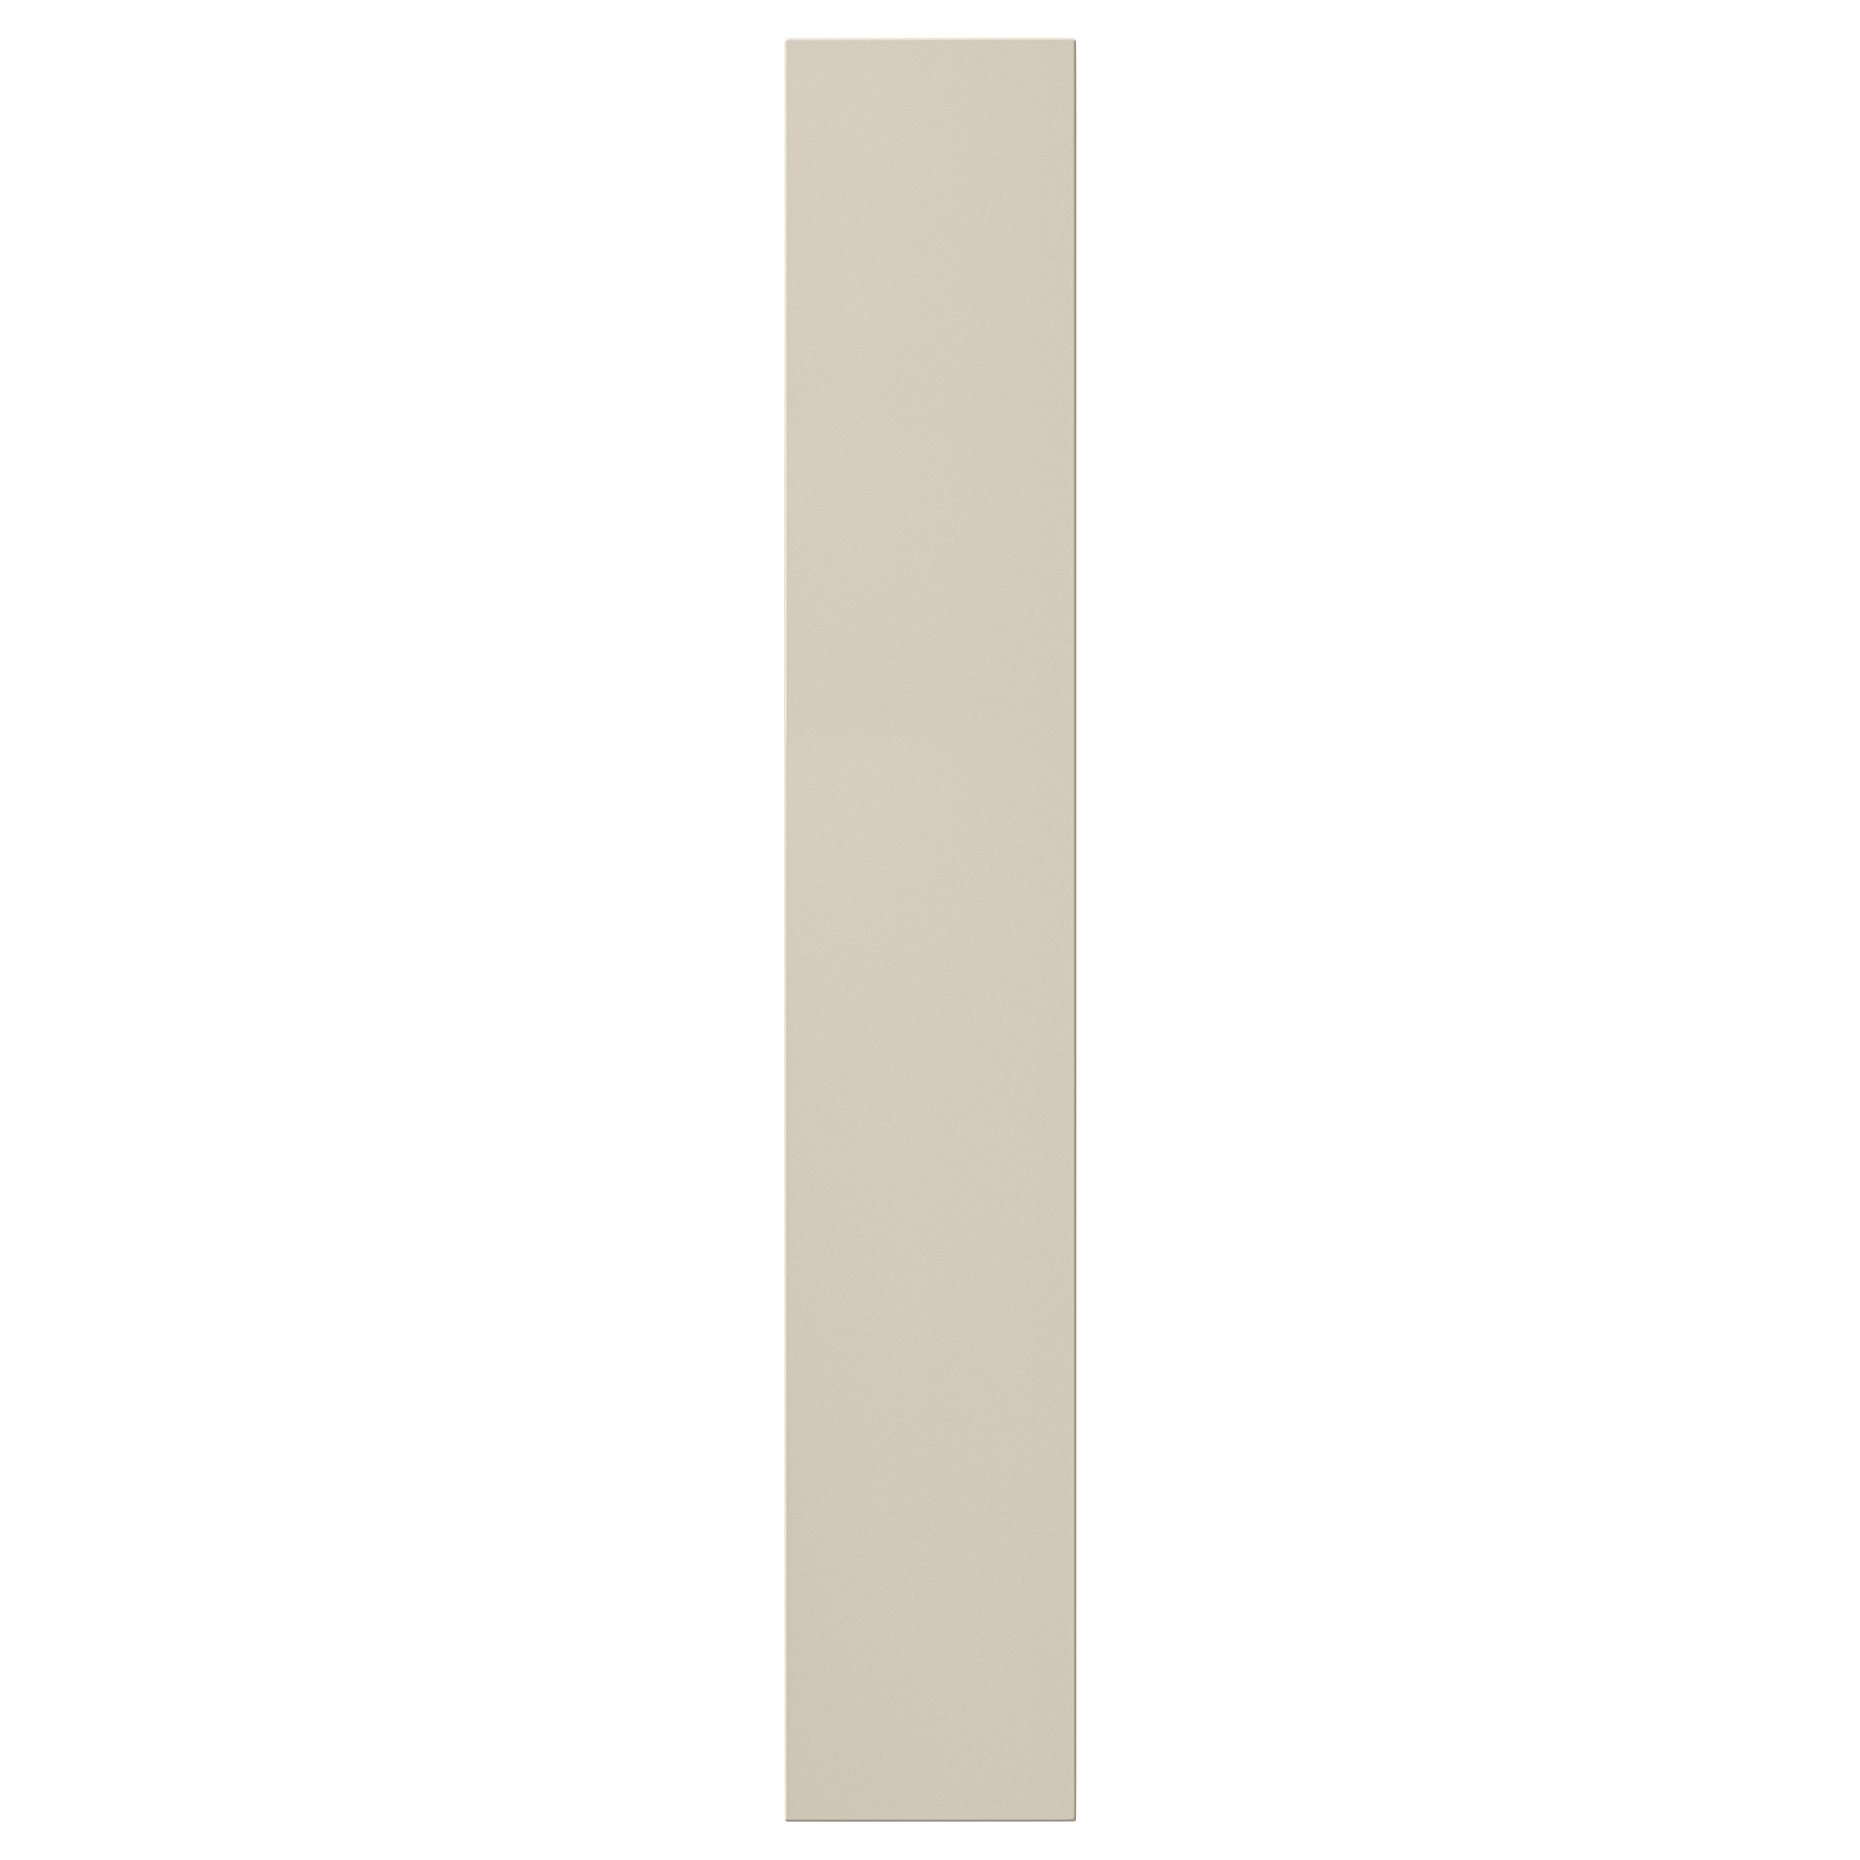 HAVSTORP, πλαϊνή επιφάνεια, 39x240 cm, 704.752.50